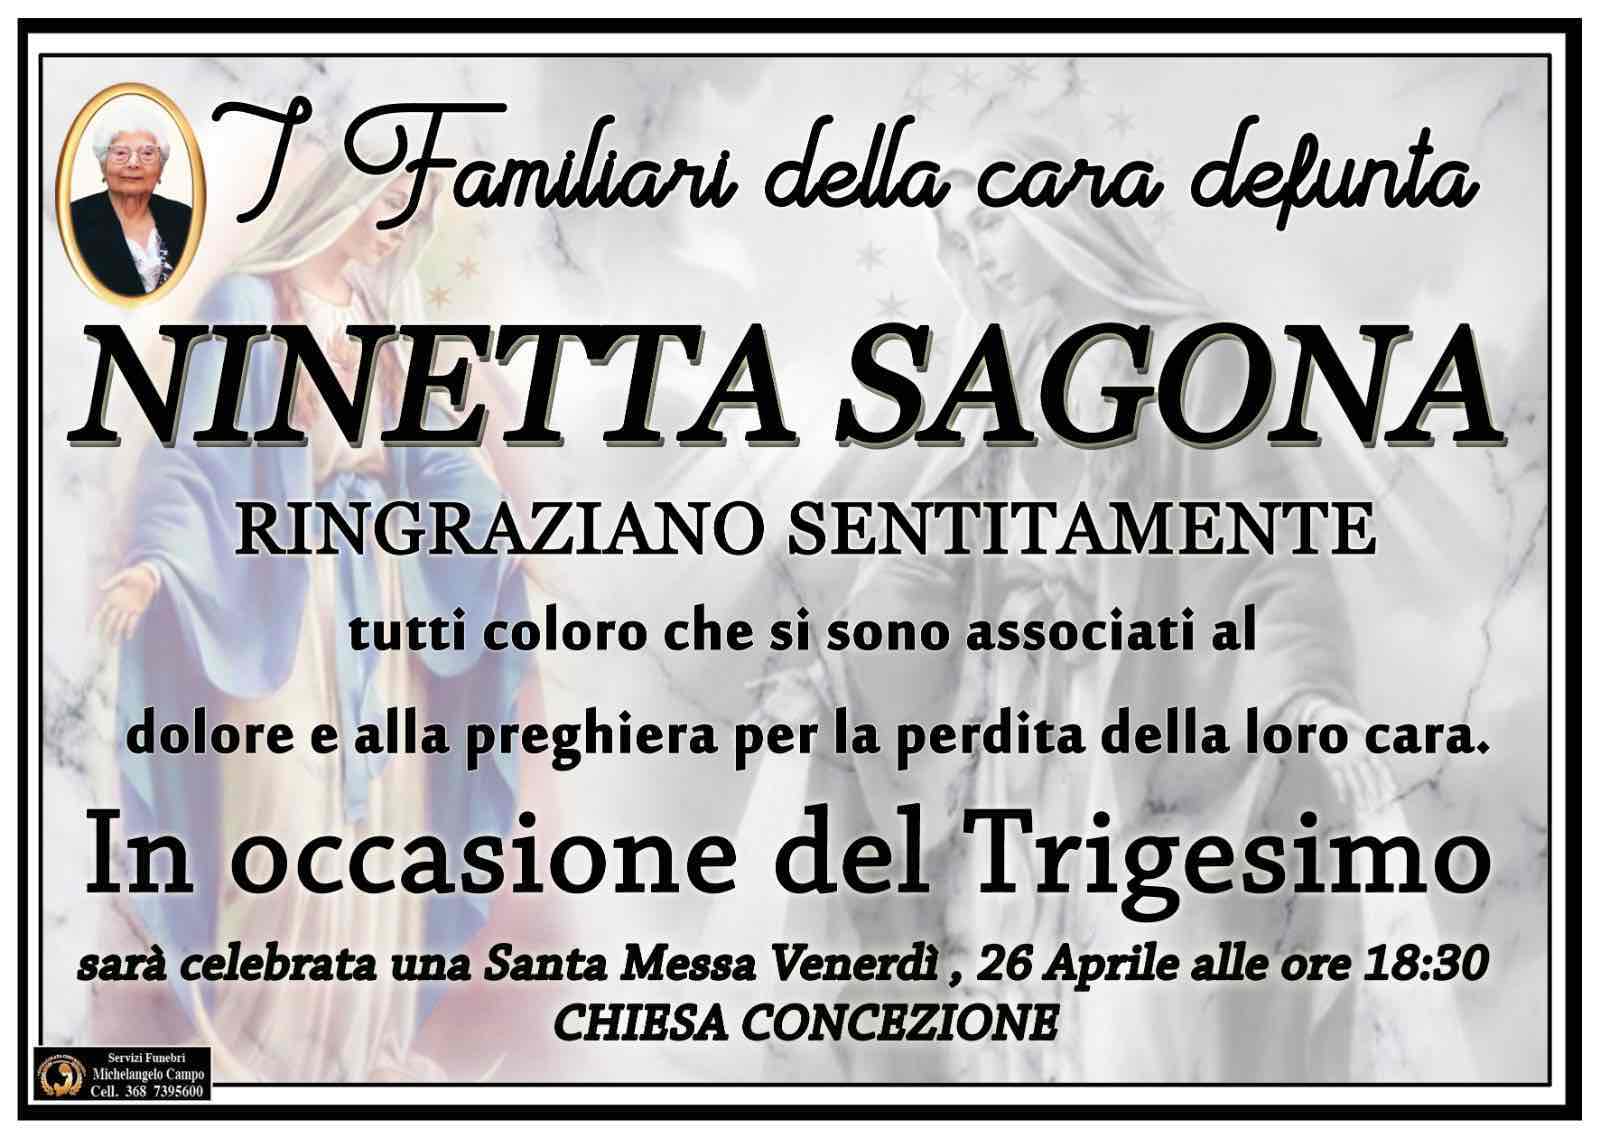 Ninetta Sagona